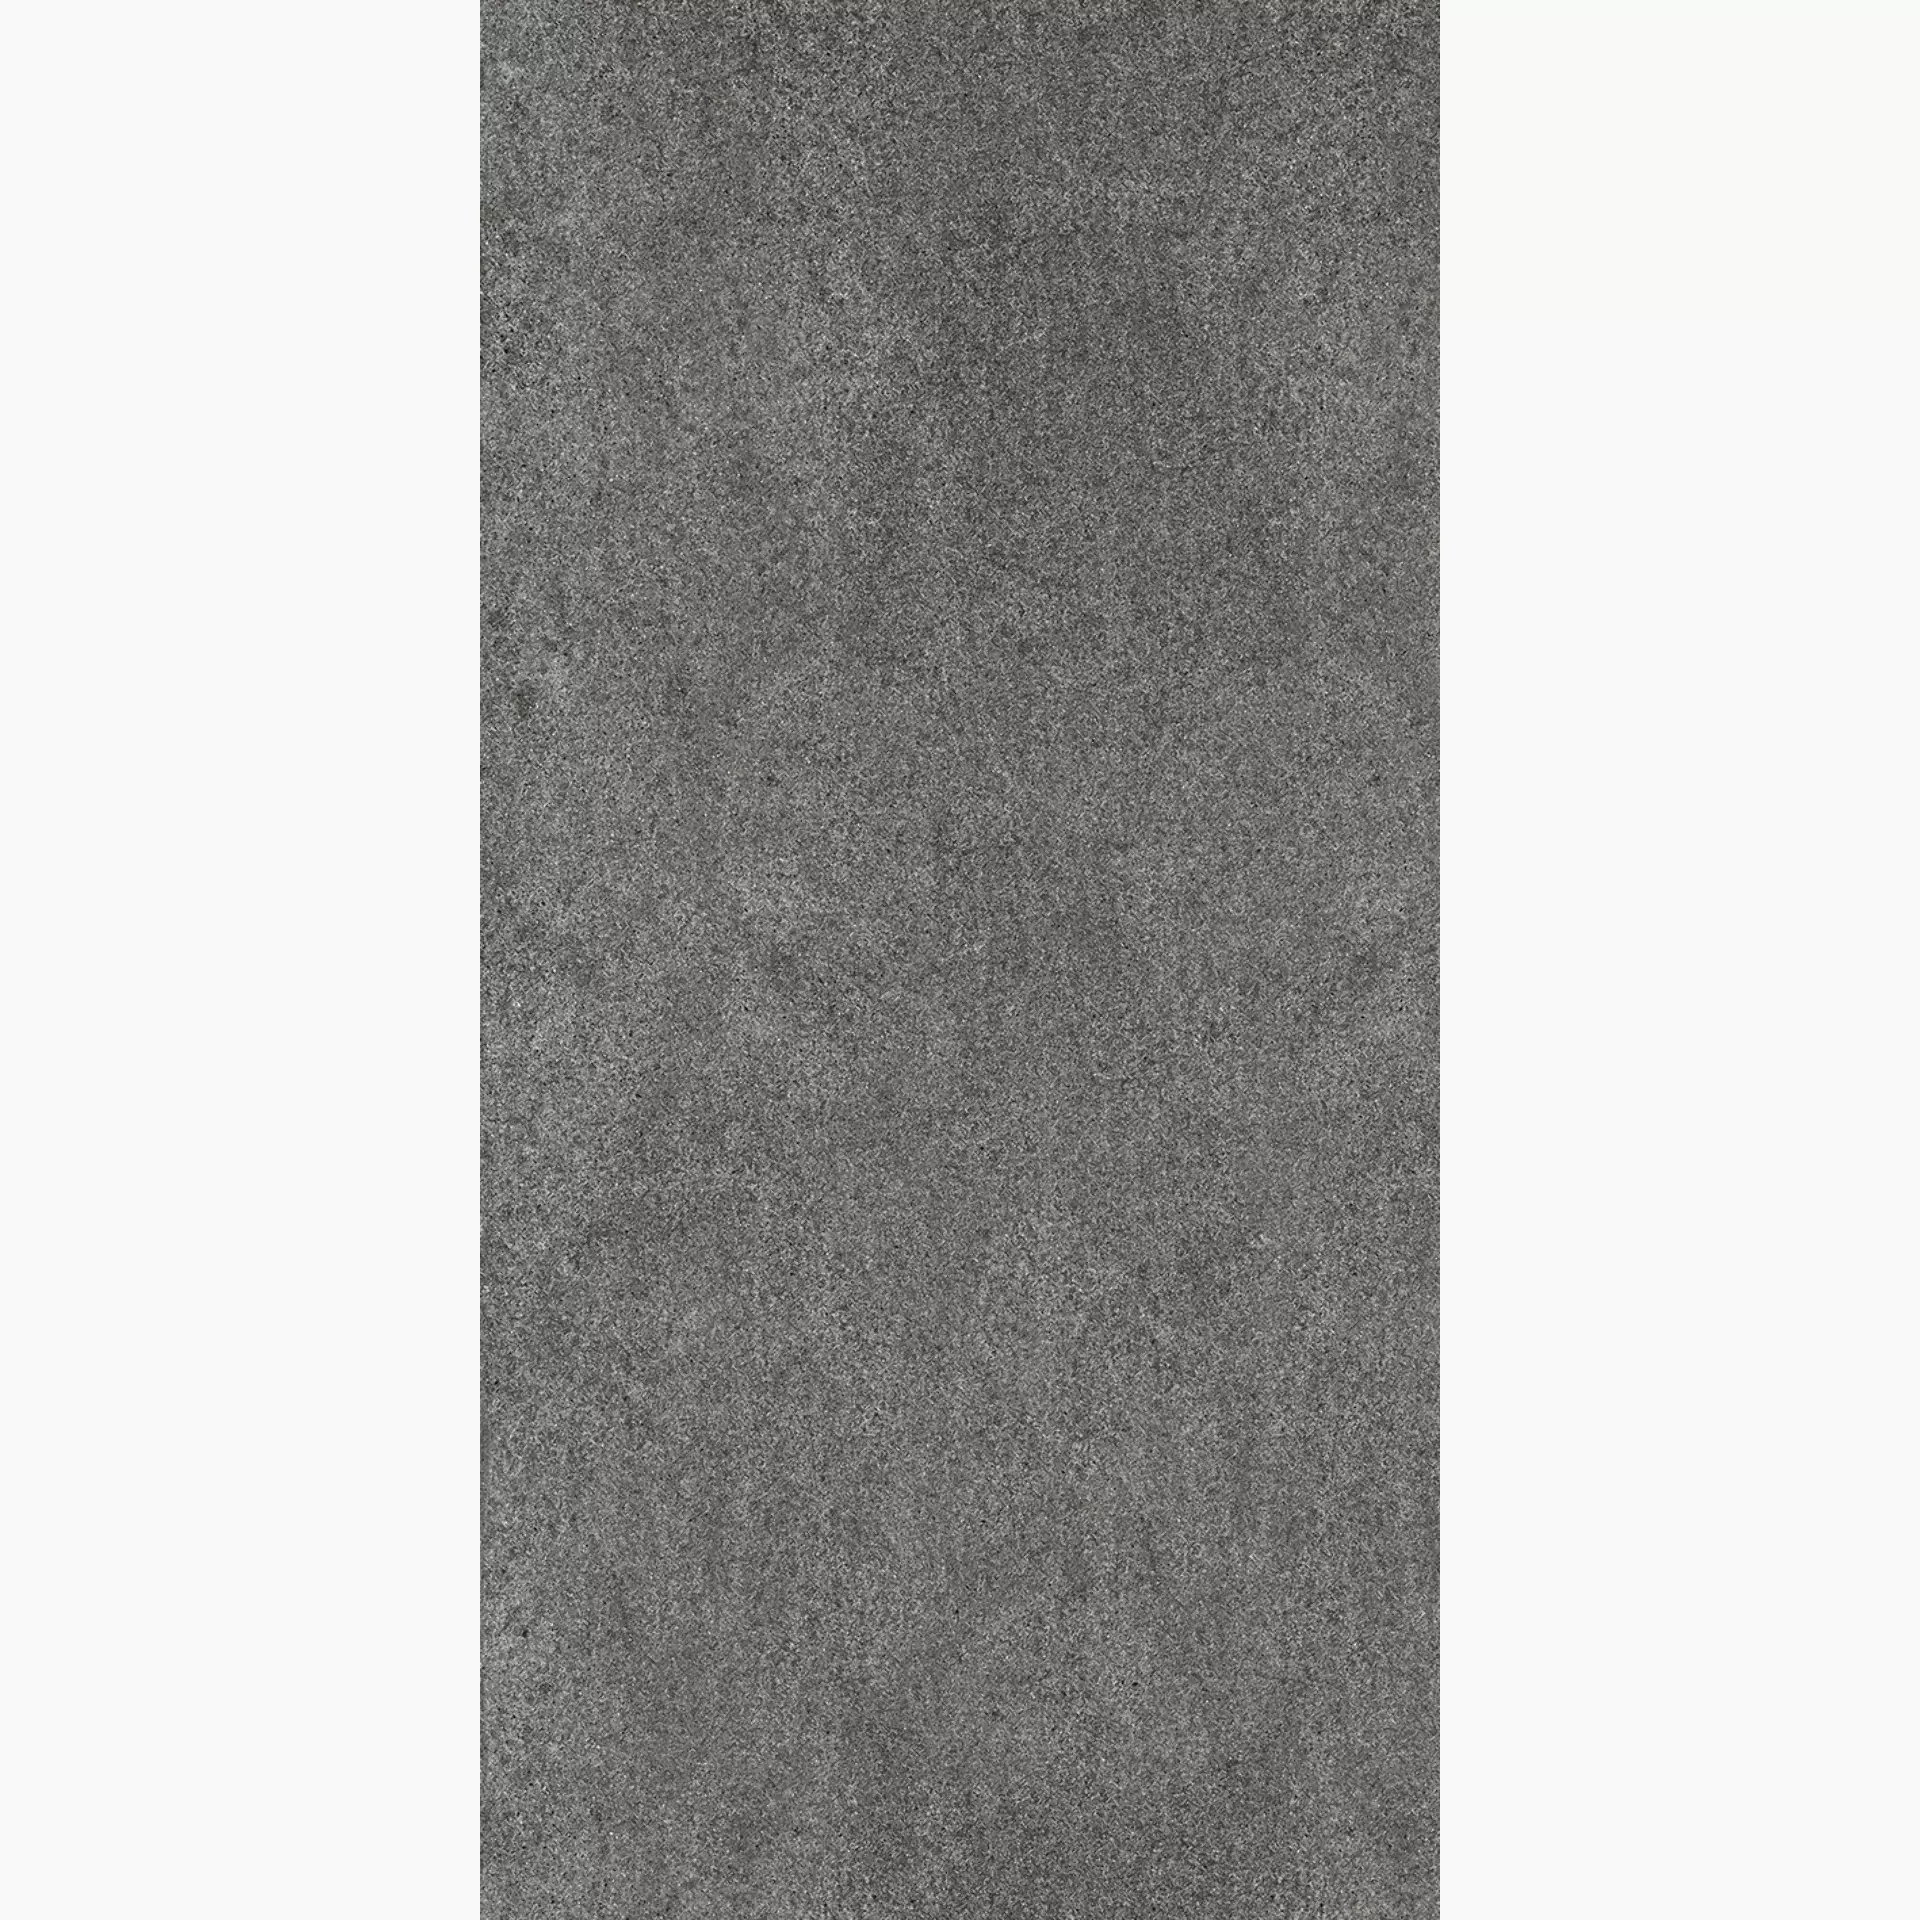 Villeroy & Boch Solid Tones Dark Stone Matt 2737-PS62 60x120cm rectified 10mm